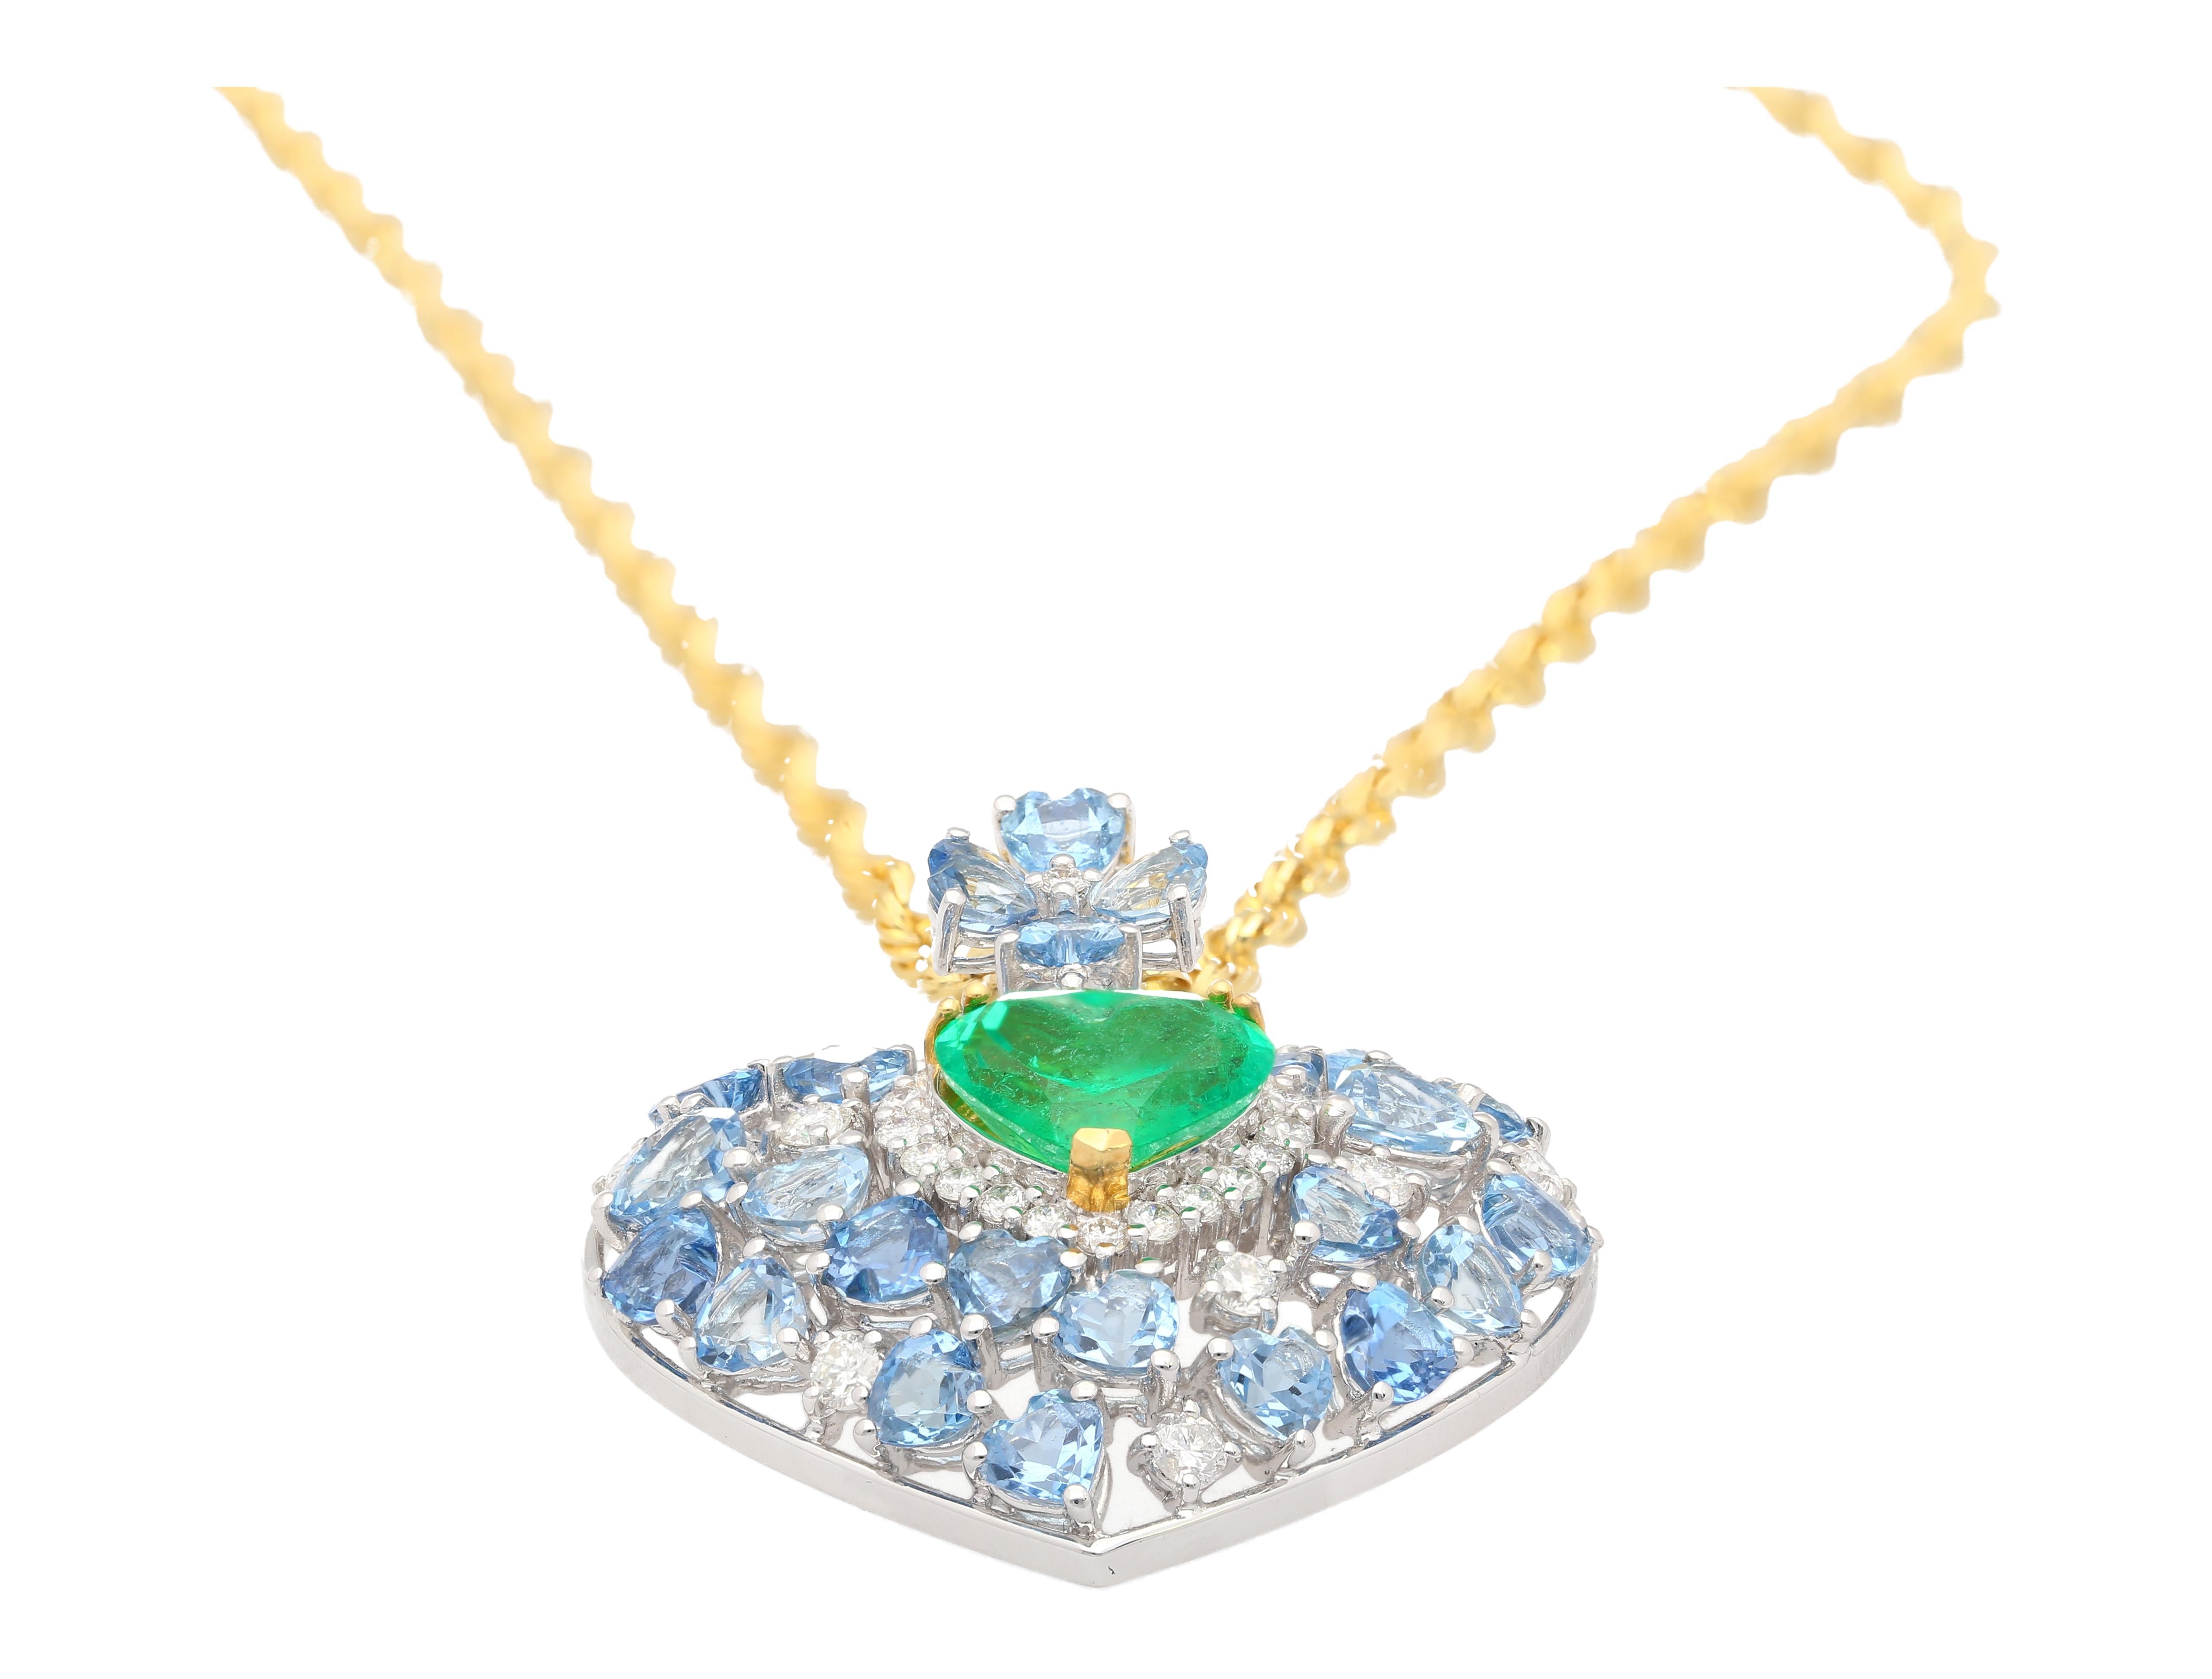 10 Carat Heart-Shape Colombian Emerald, Aquamarine, and Diamond 18K Necklace For Sale 2